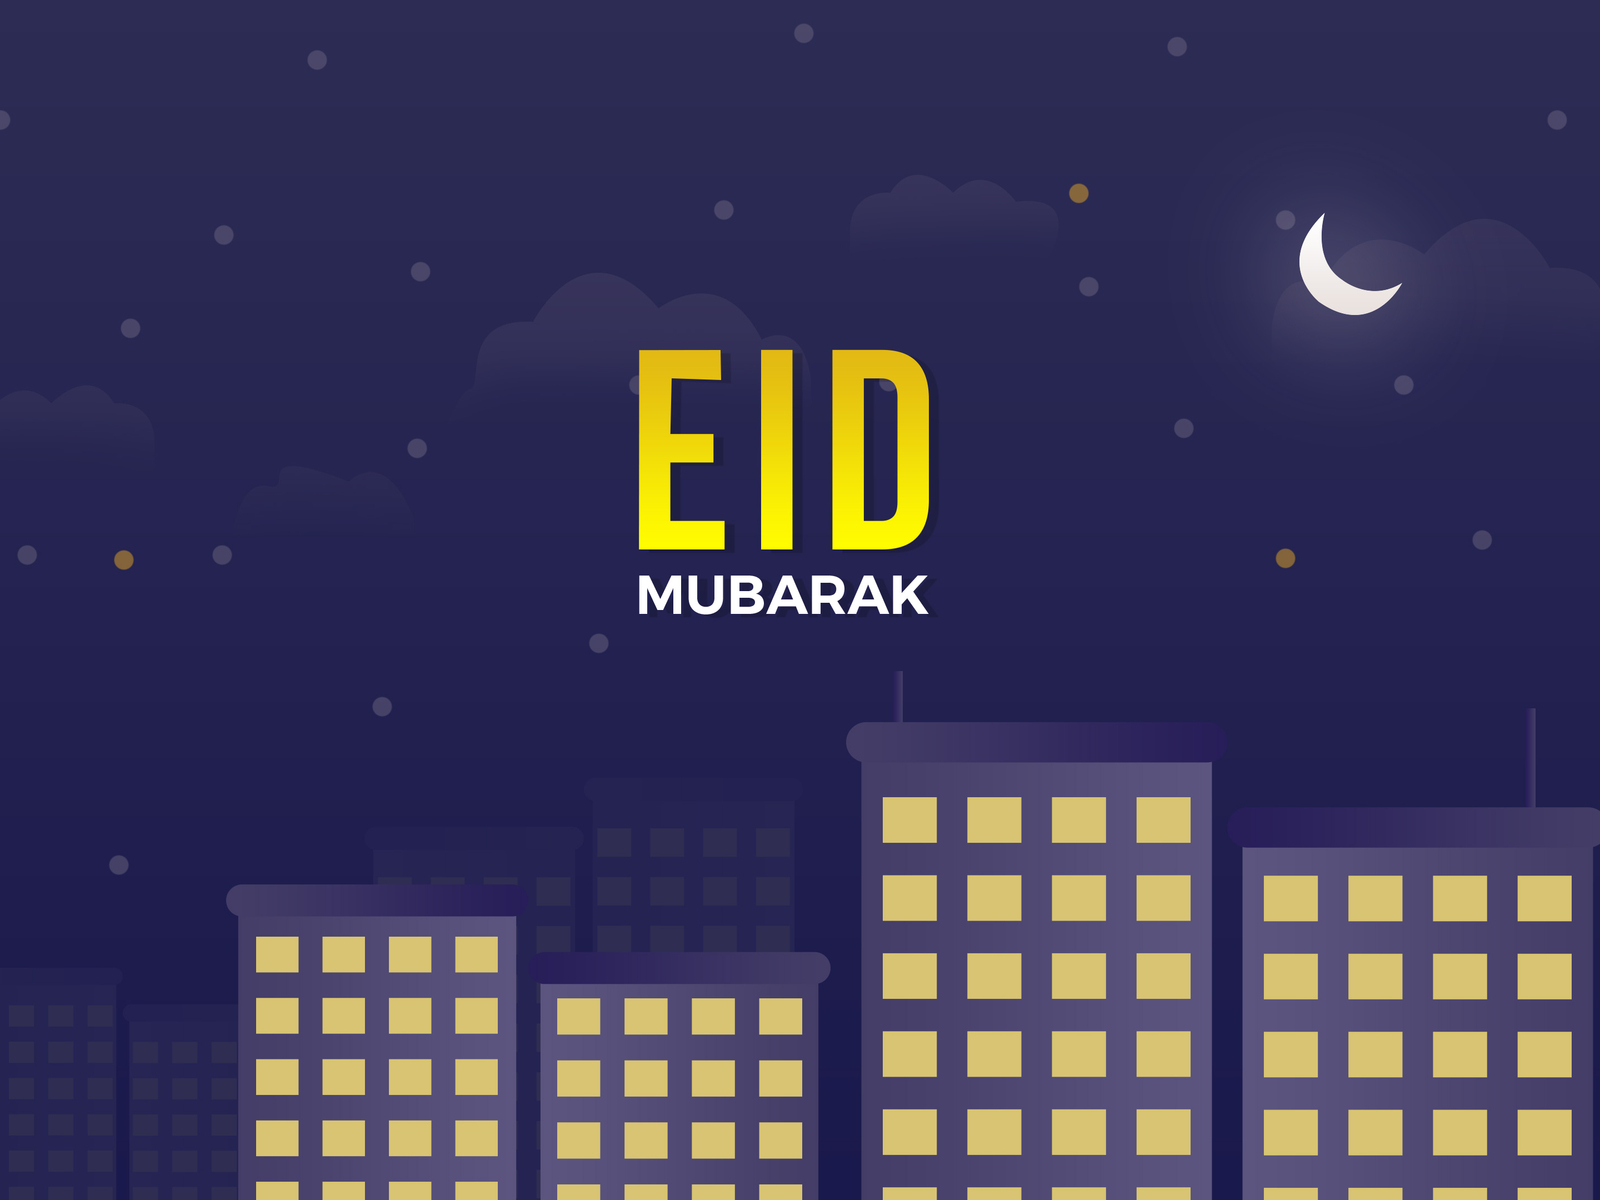 Eid Mubarak 4K Wallpaper by Mehran Shahid Chowdhury on Dribbble